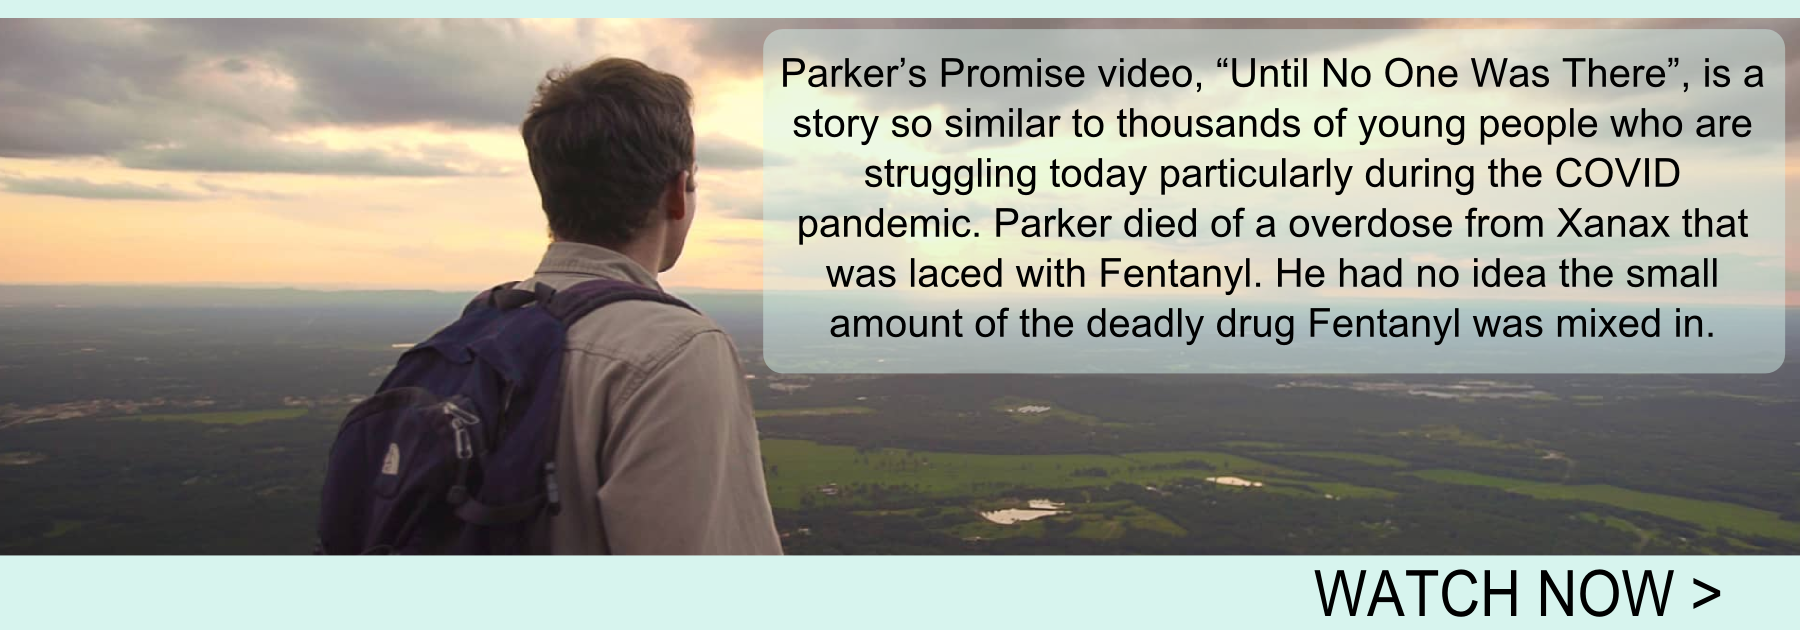 Parkers Promise